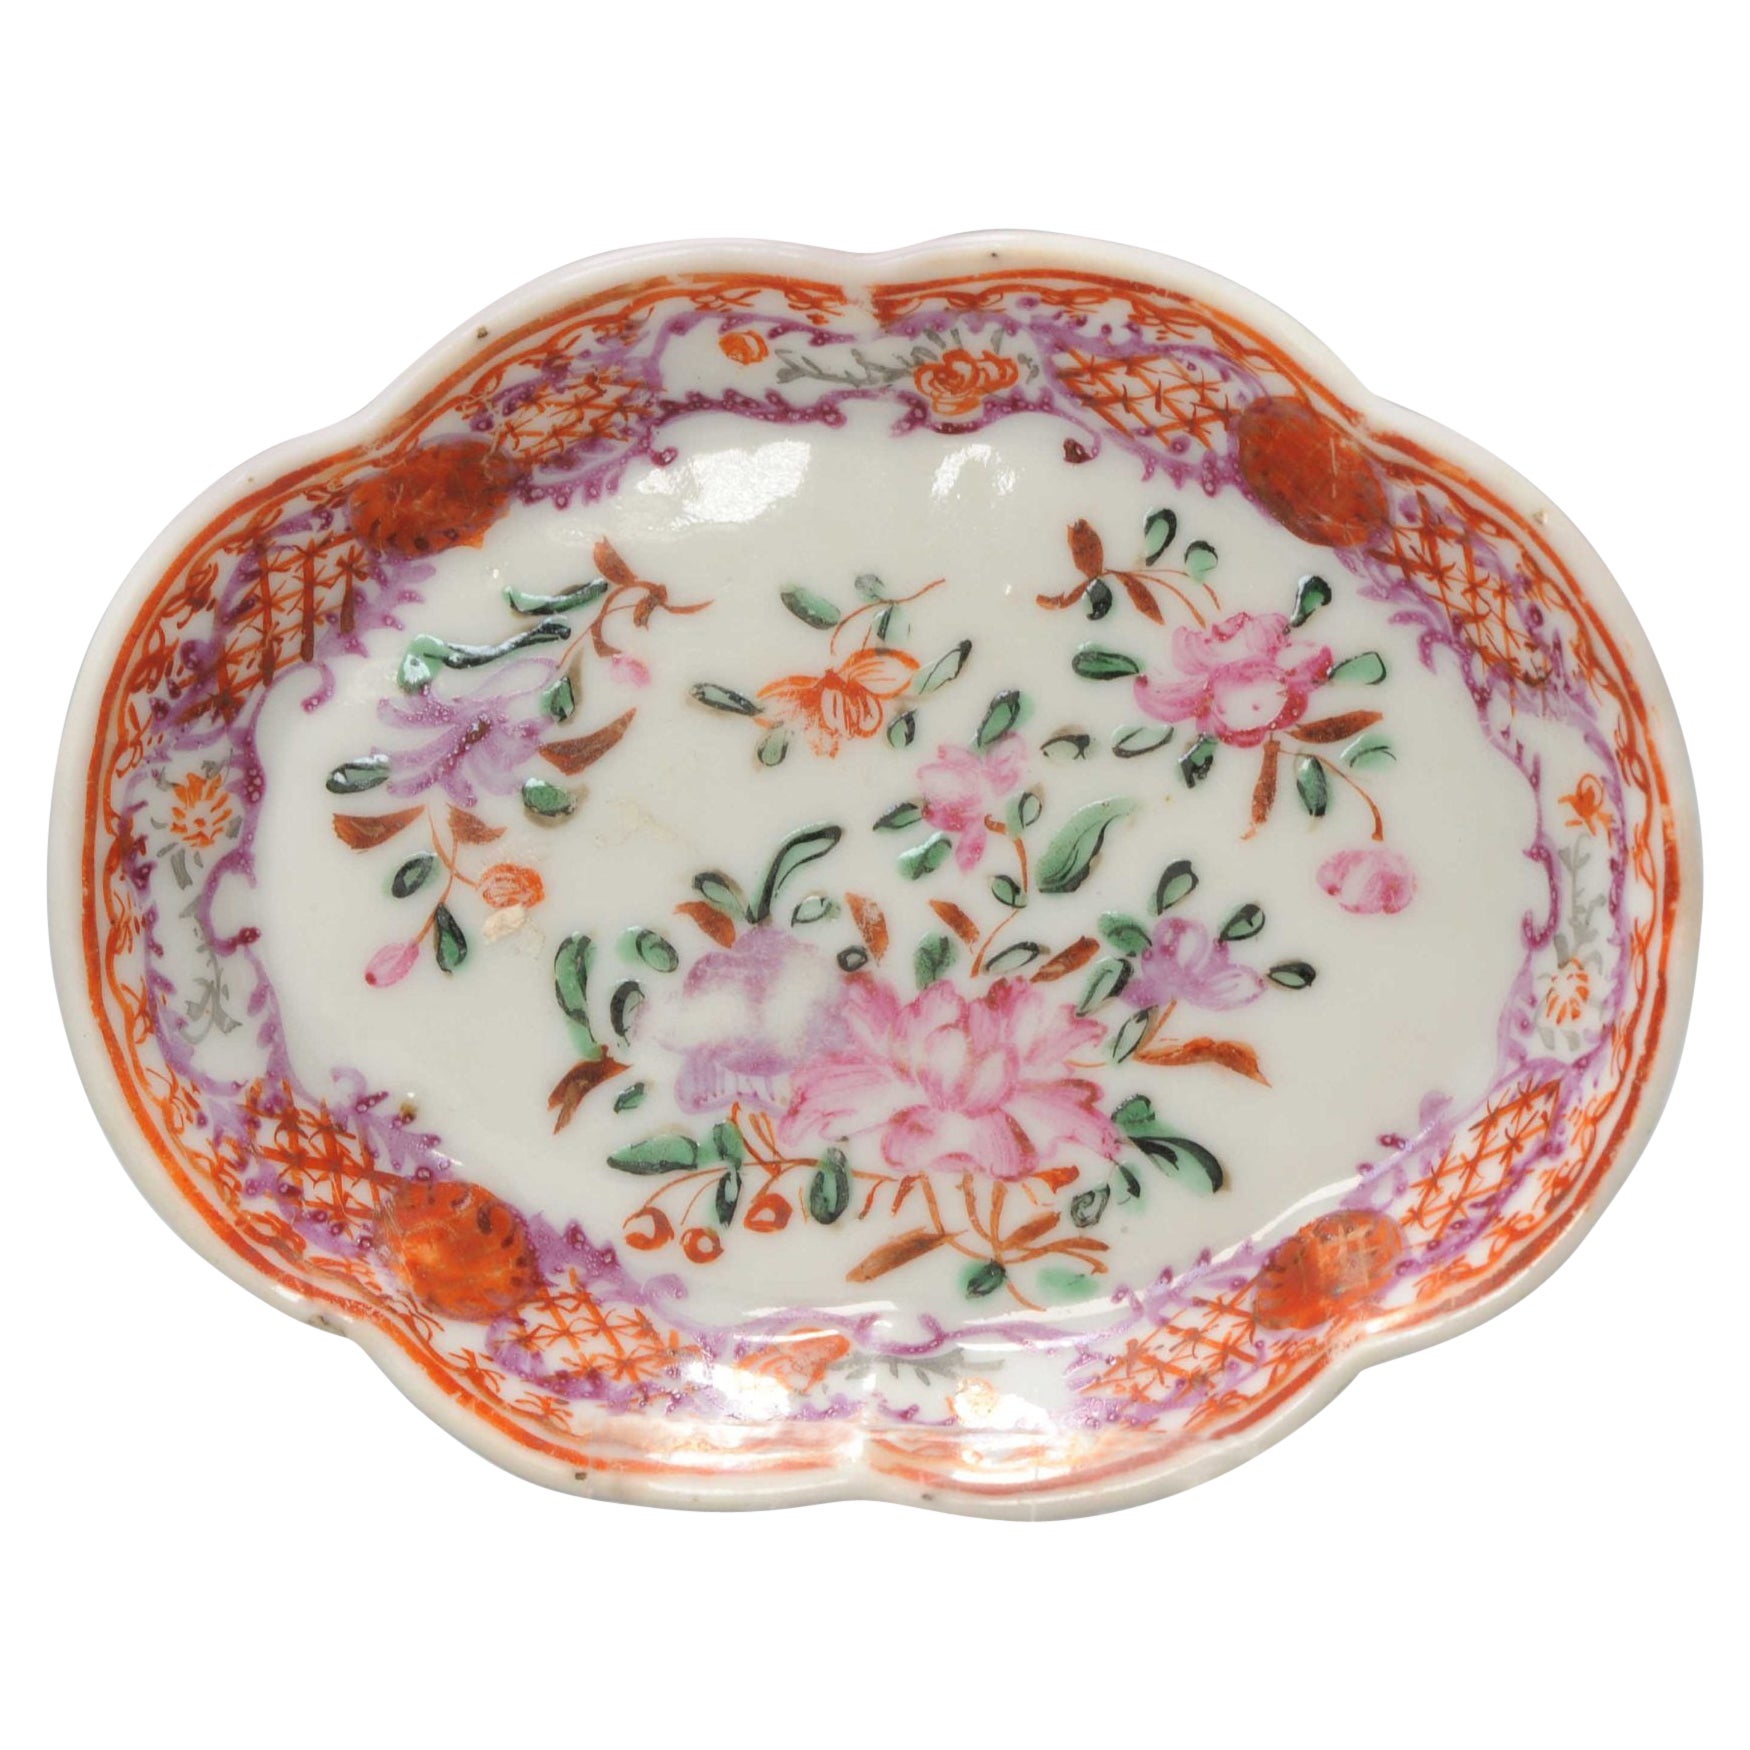 Pattipan Porcelain Chine de commande Famille Rose China, 18th Century